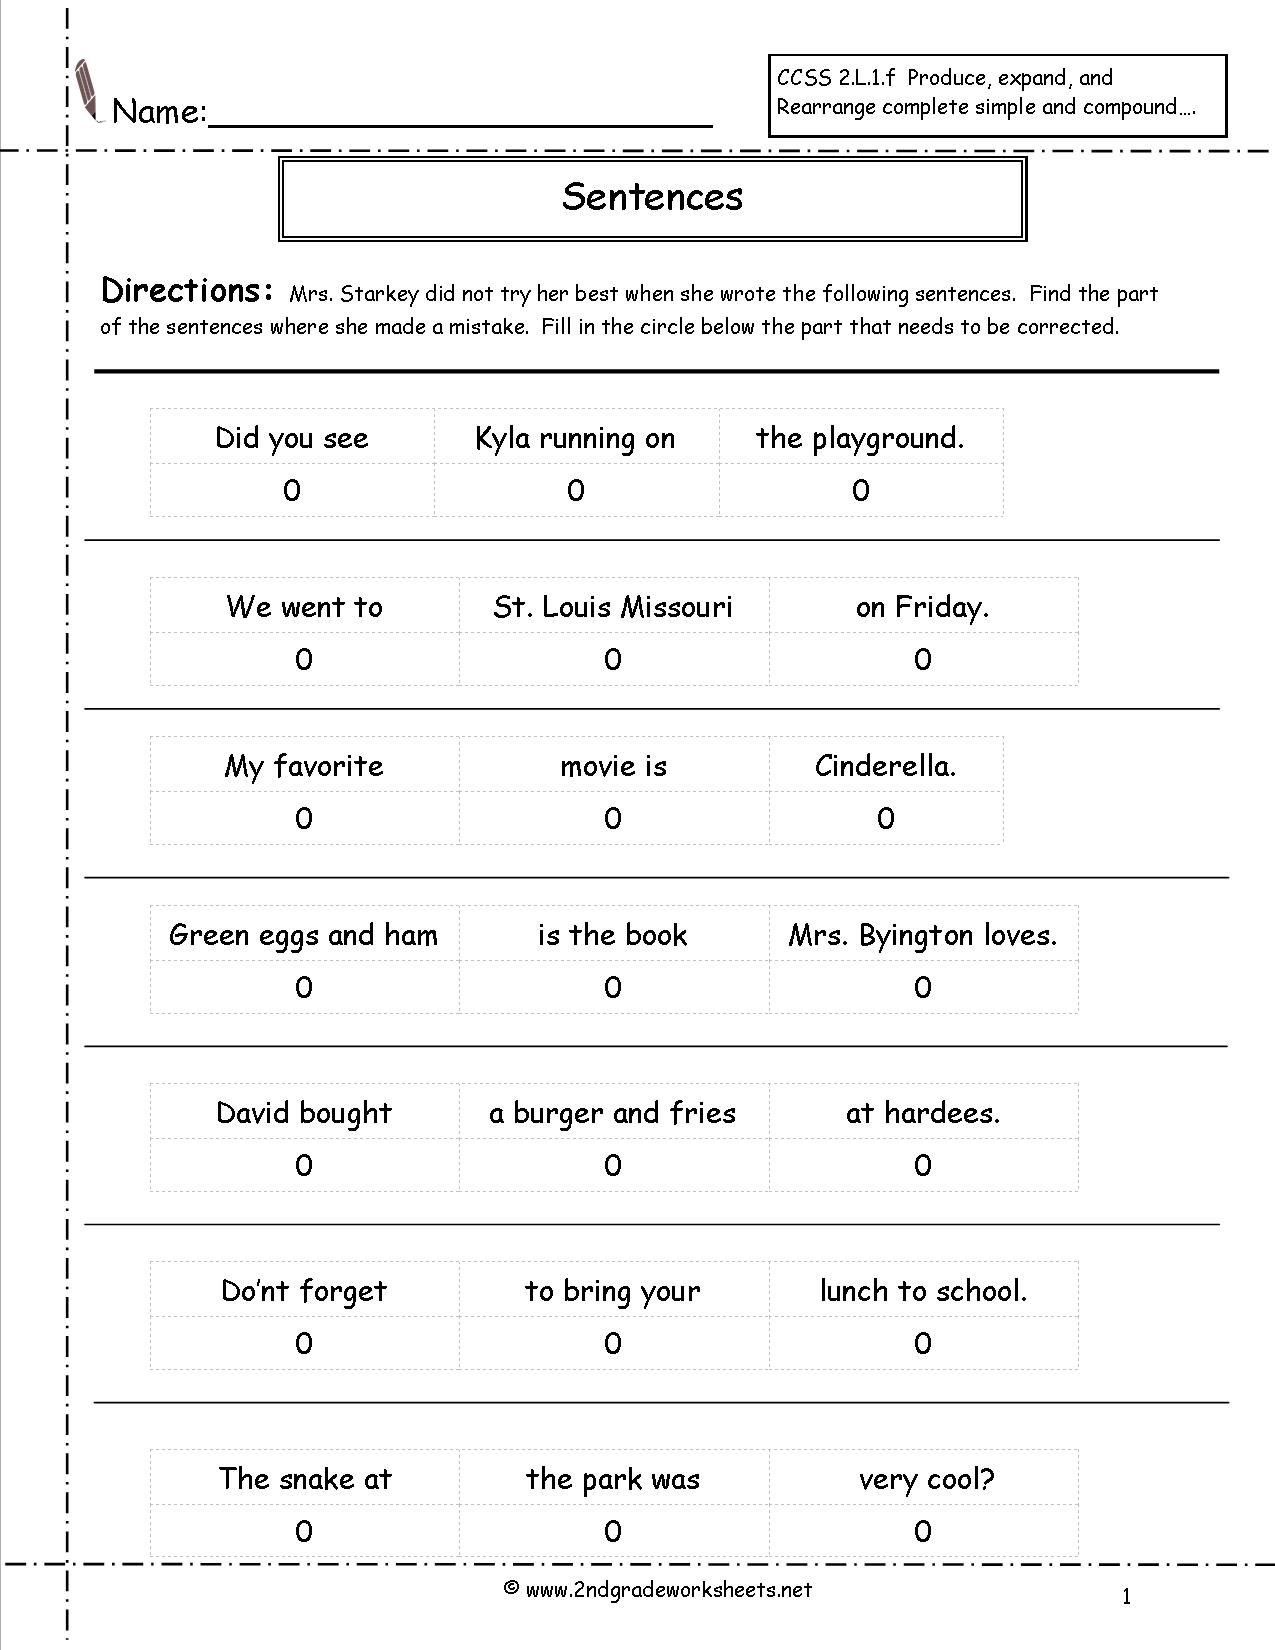 Sentence Correction Worksheets 2nd Grade